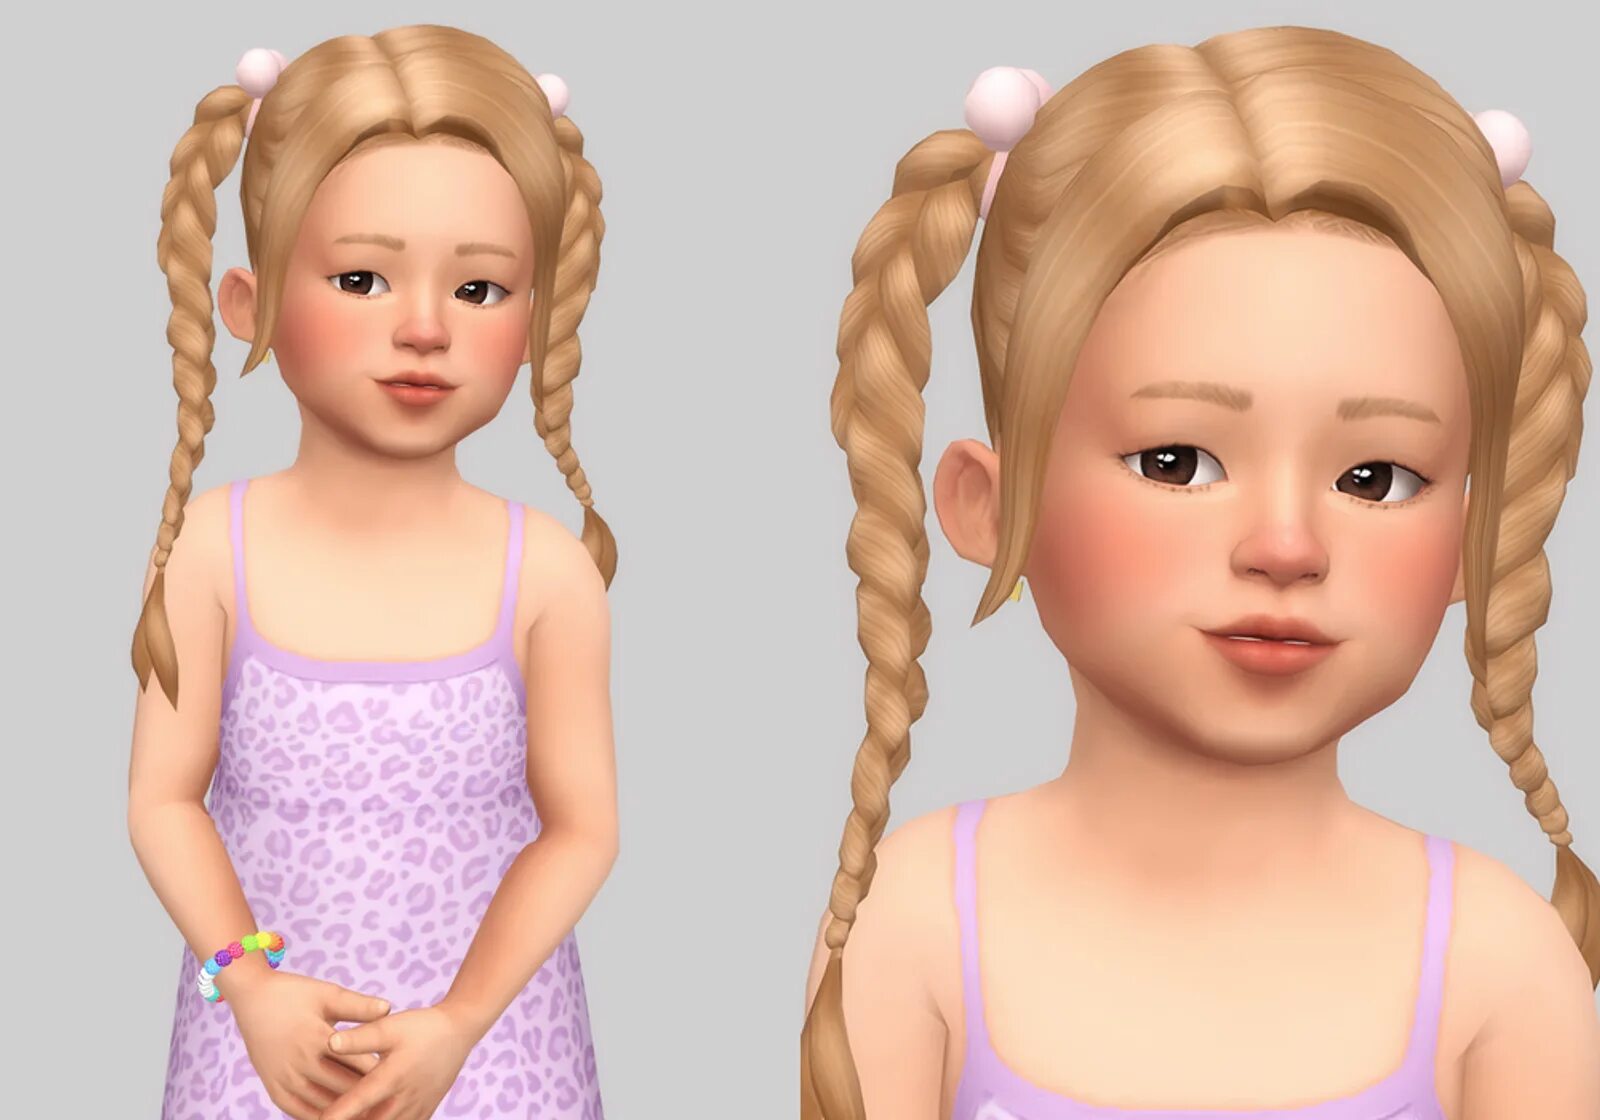 Sims 4 mods sim child. Child hair SIMS 4. Симс 4 тодлер волосы. Симс 4 прически для детей. Прически для младенцев симс 4.